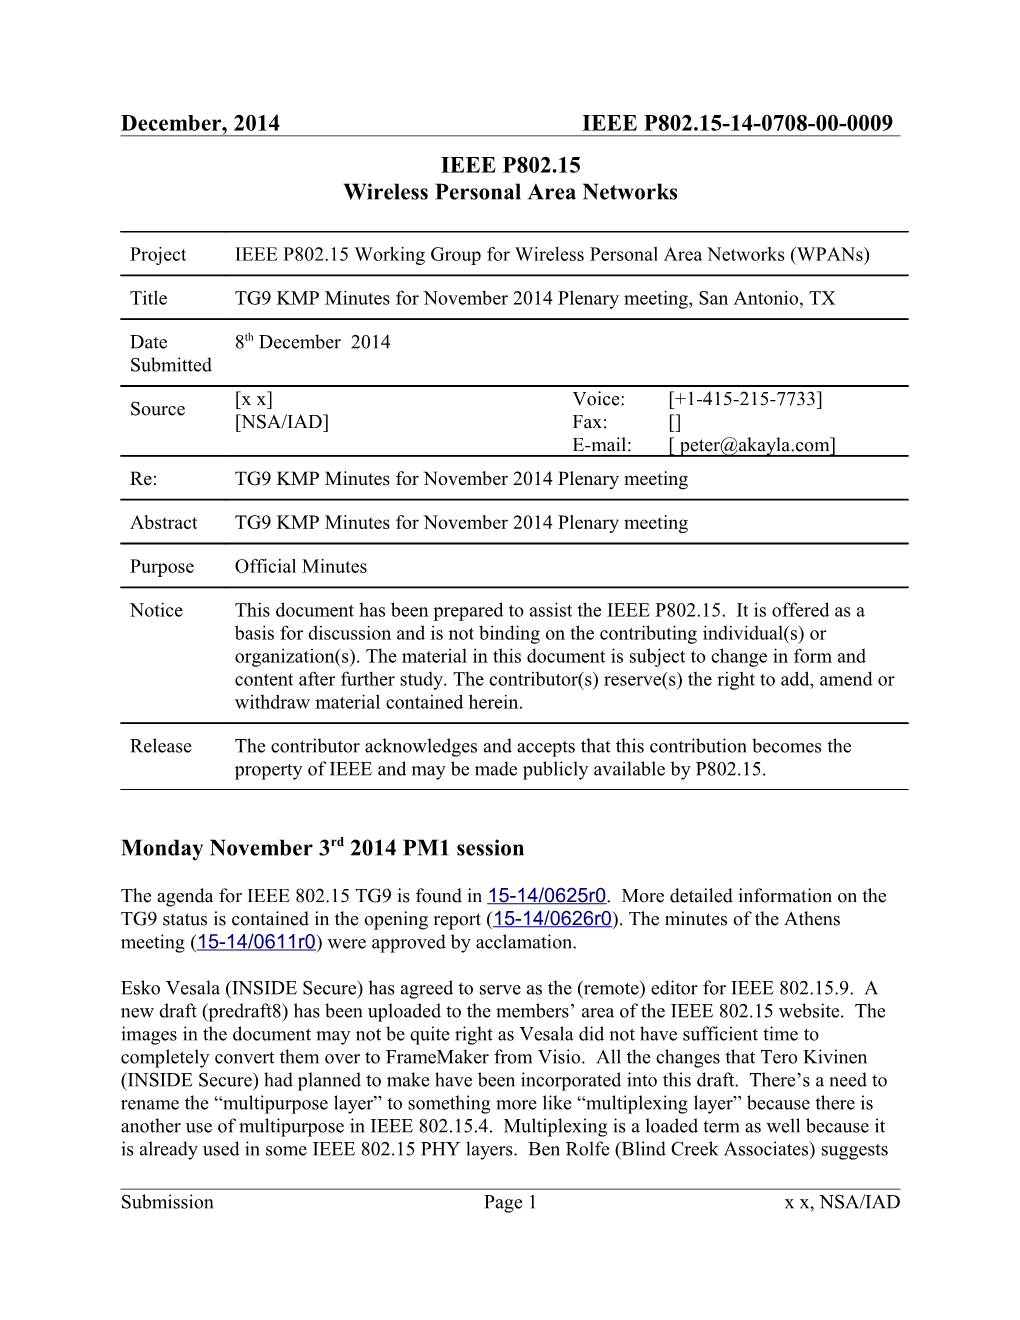 TG9 KMP Minutes for November 2014 Plenary Meeting, San Antonio, TX